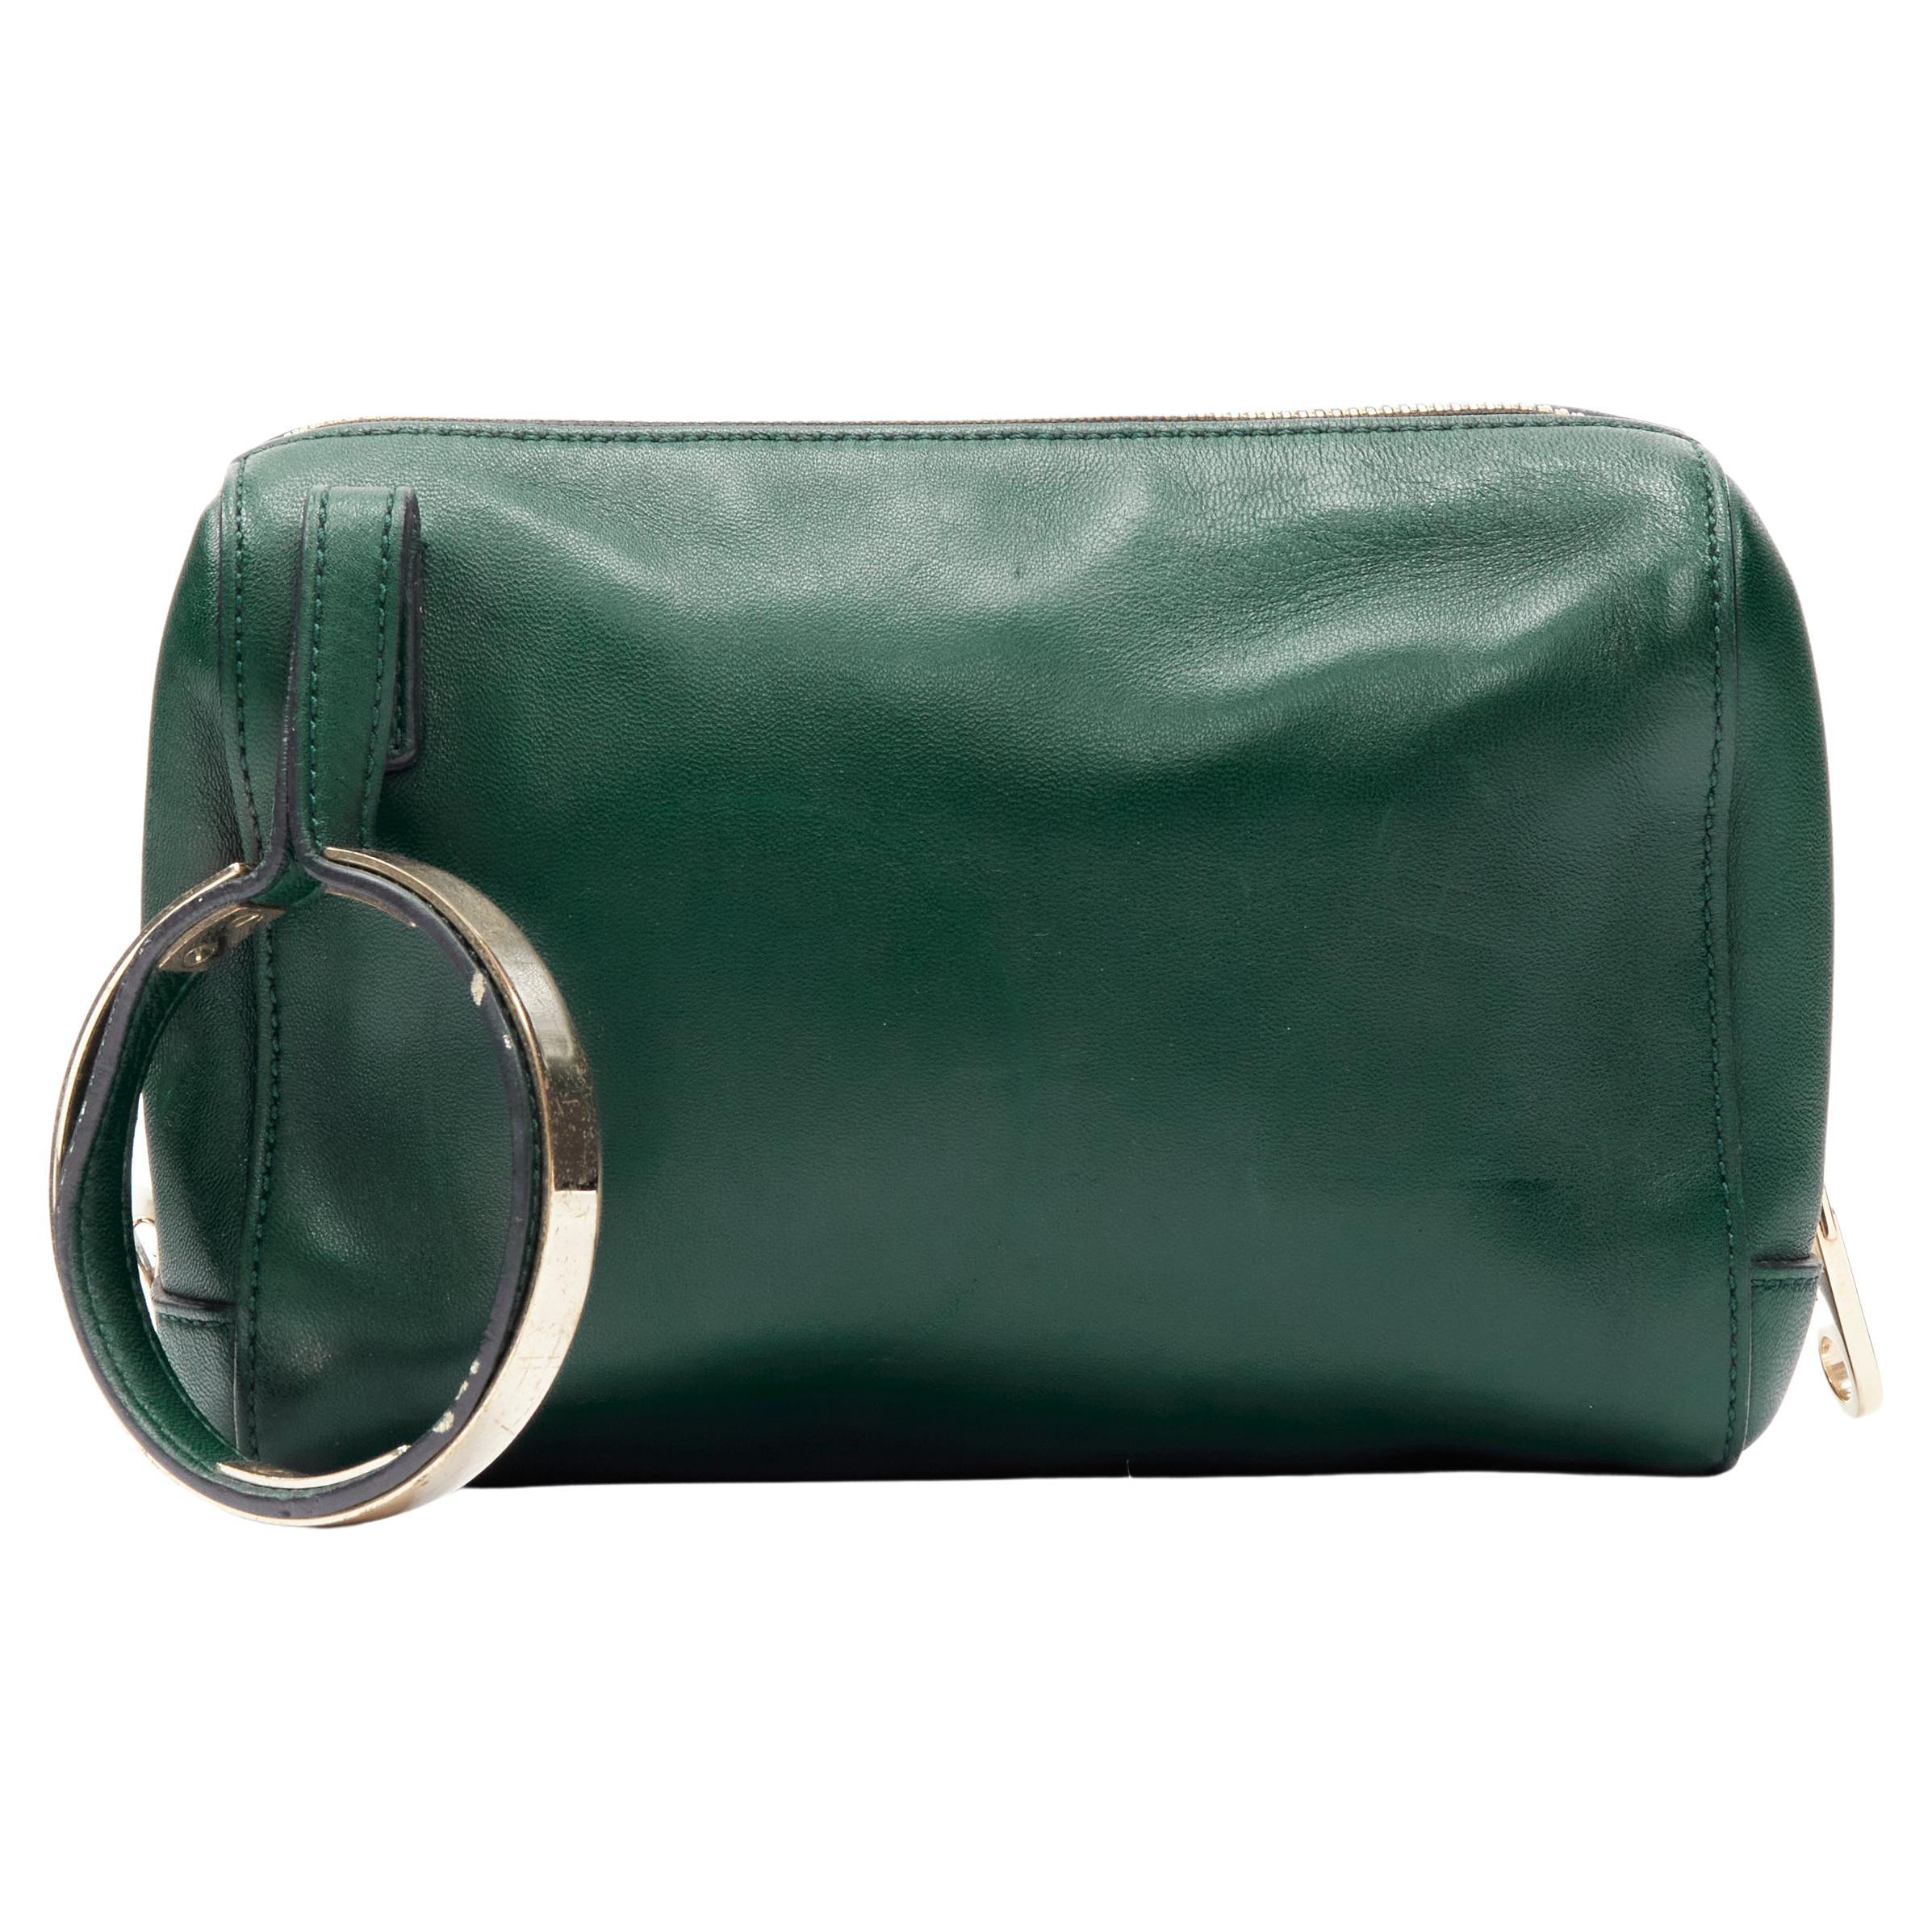 CHLOE dark green leather gold bangle cuff zip pouch clutch